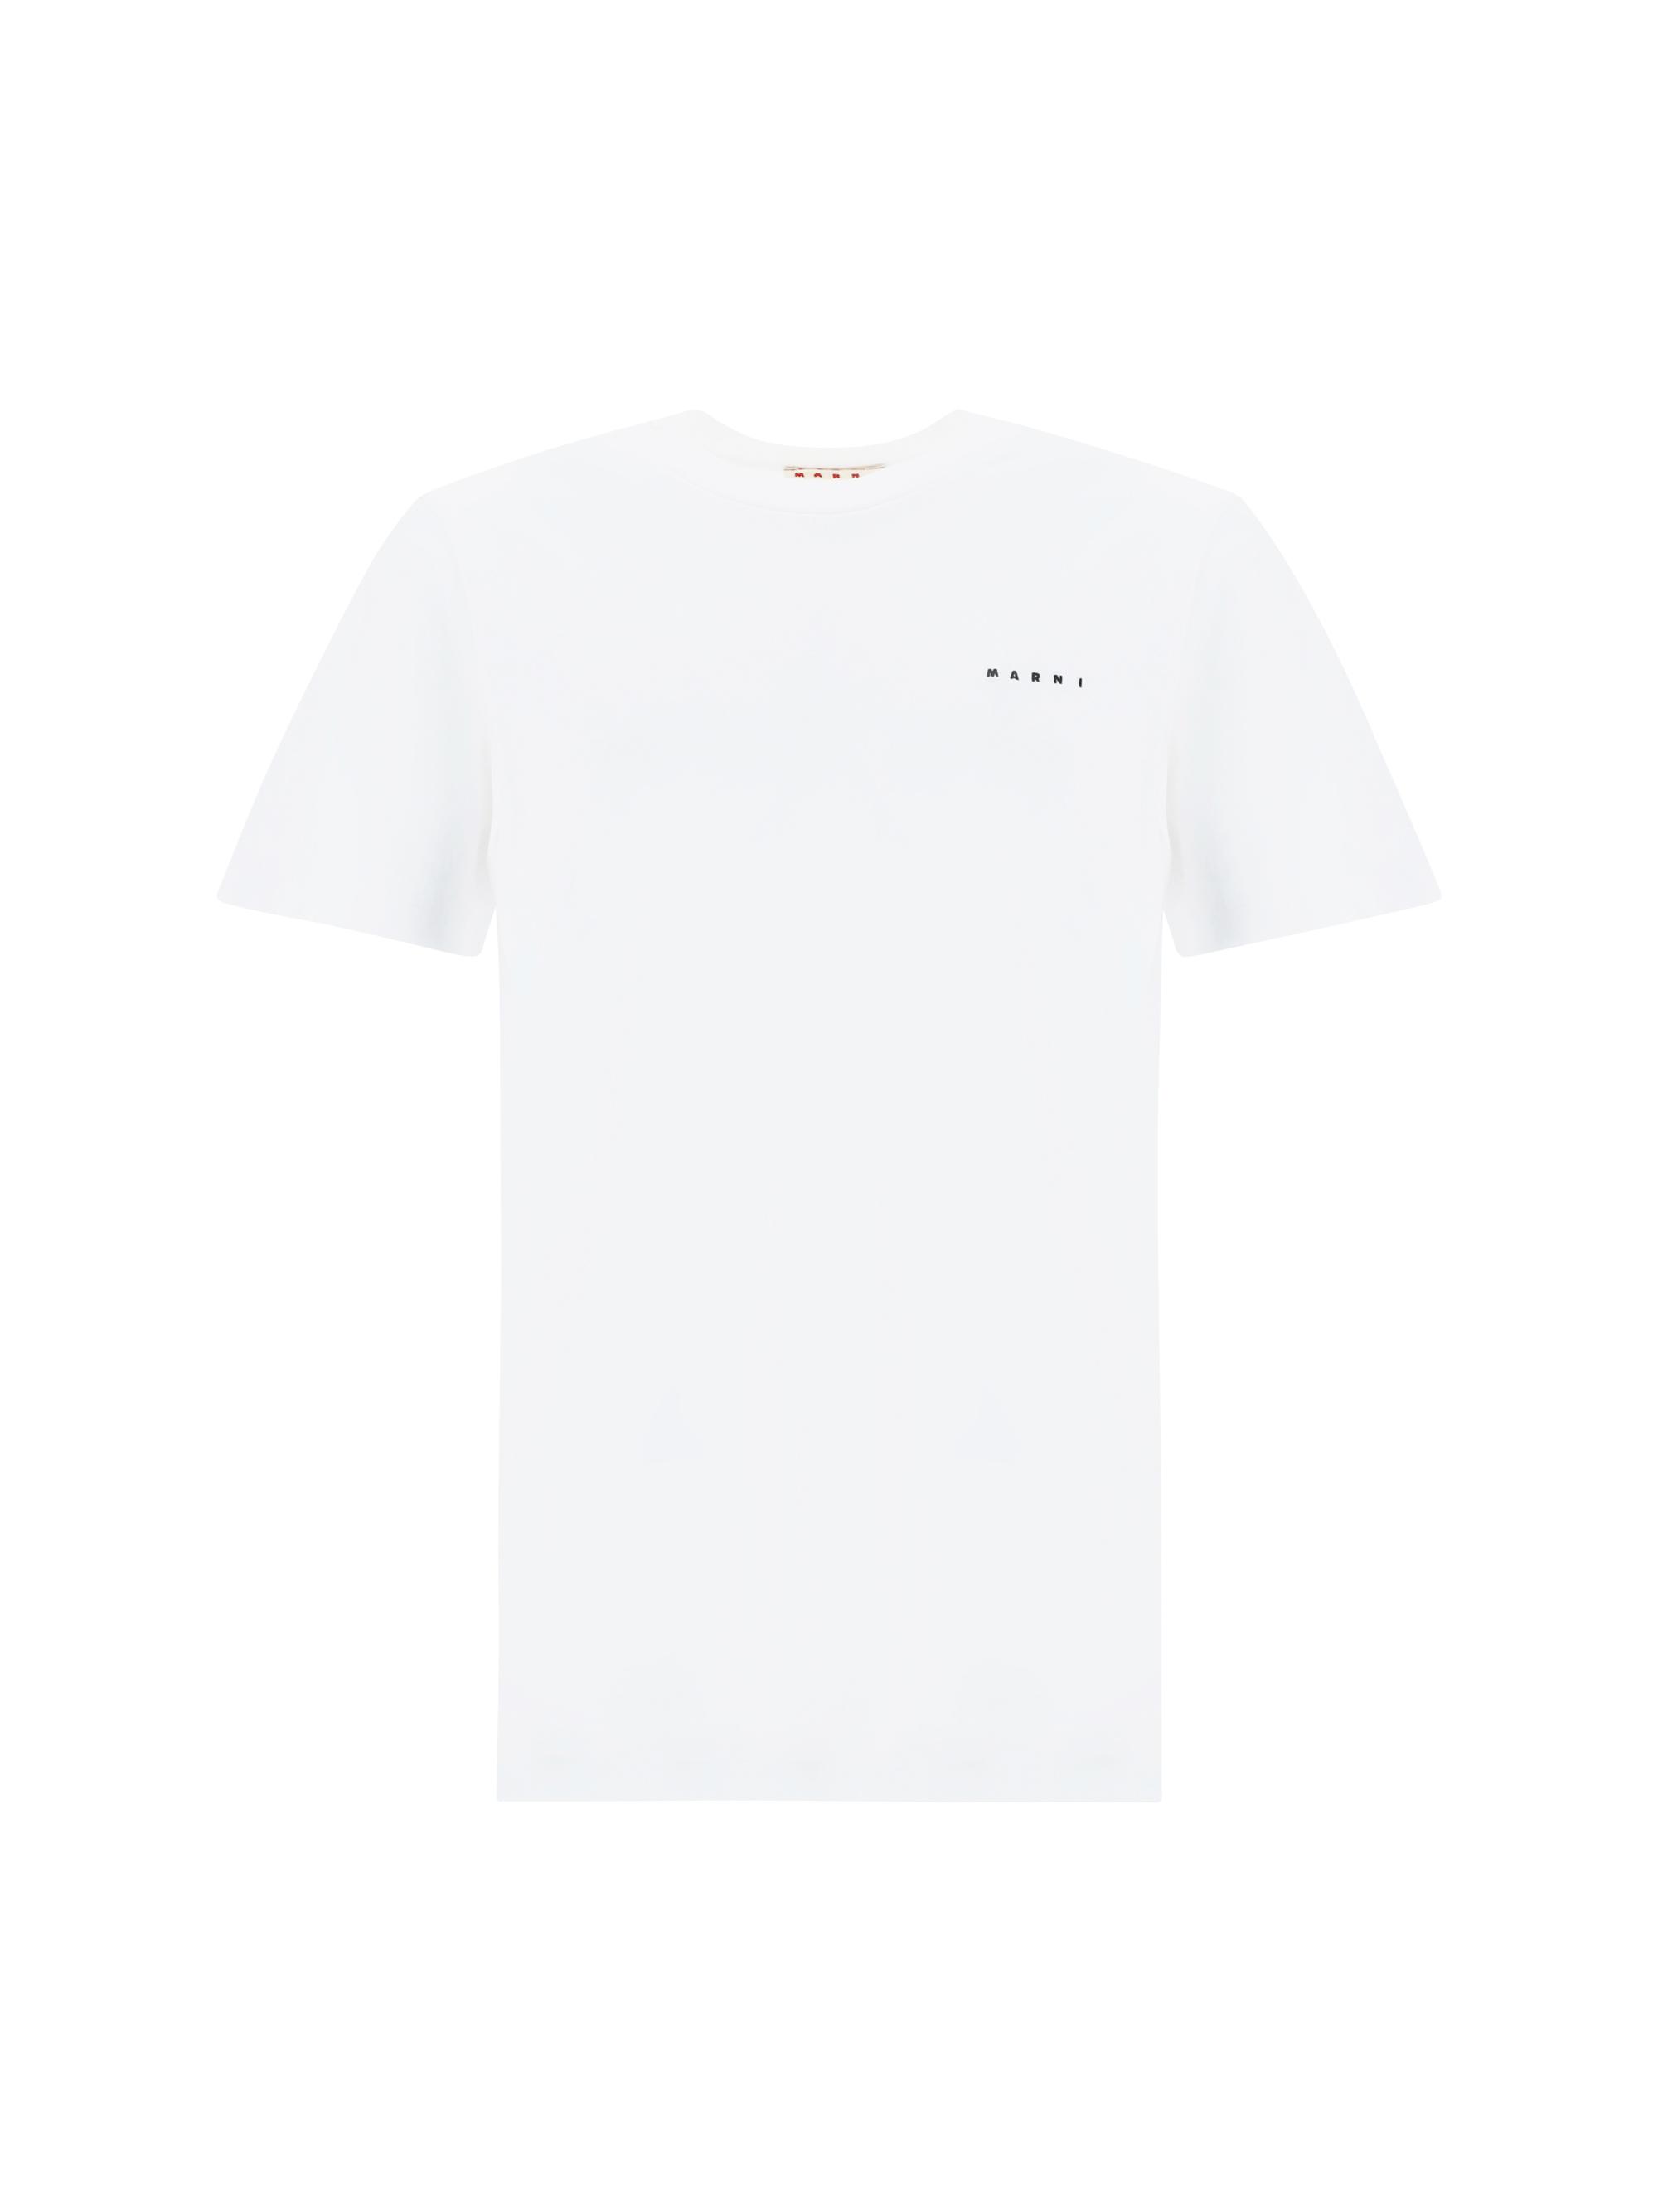 Marni Drip Logo Print Cotton Jersey T-shirt In White